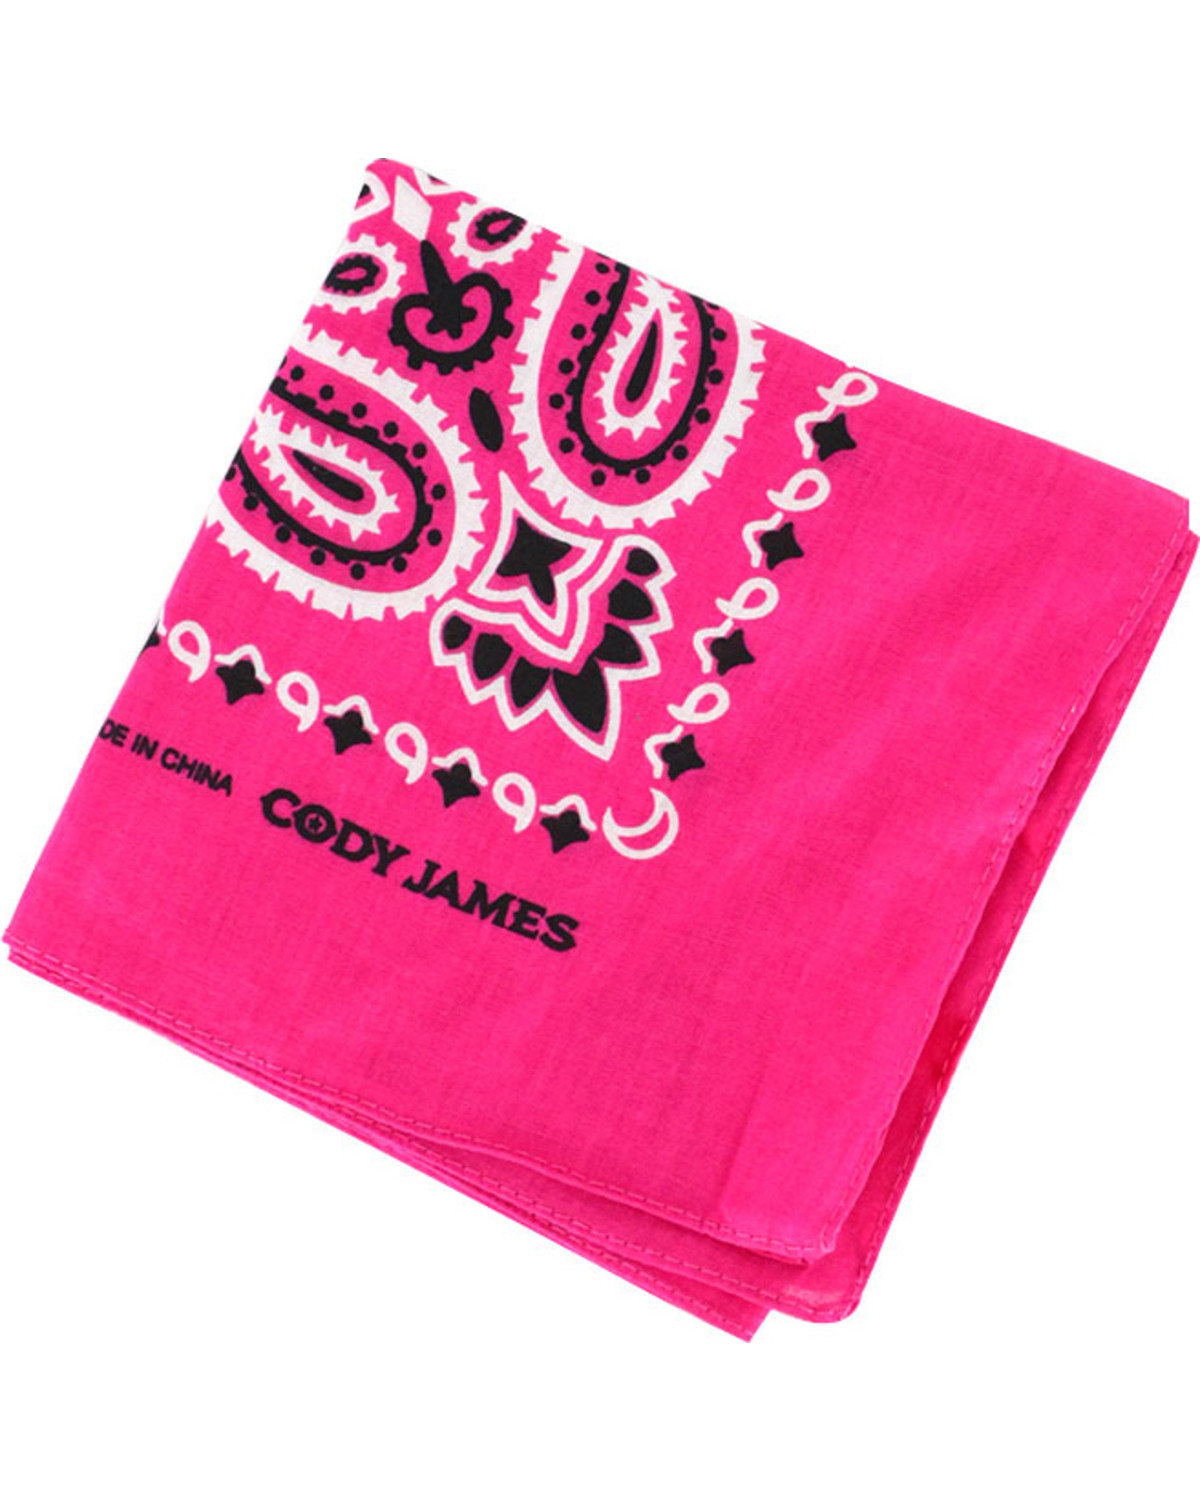 Cody James Men's Pink Bandana